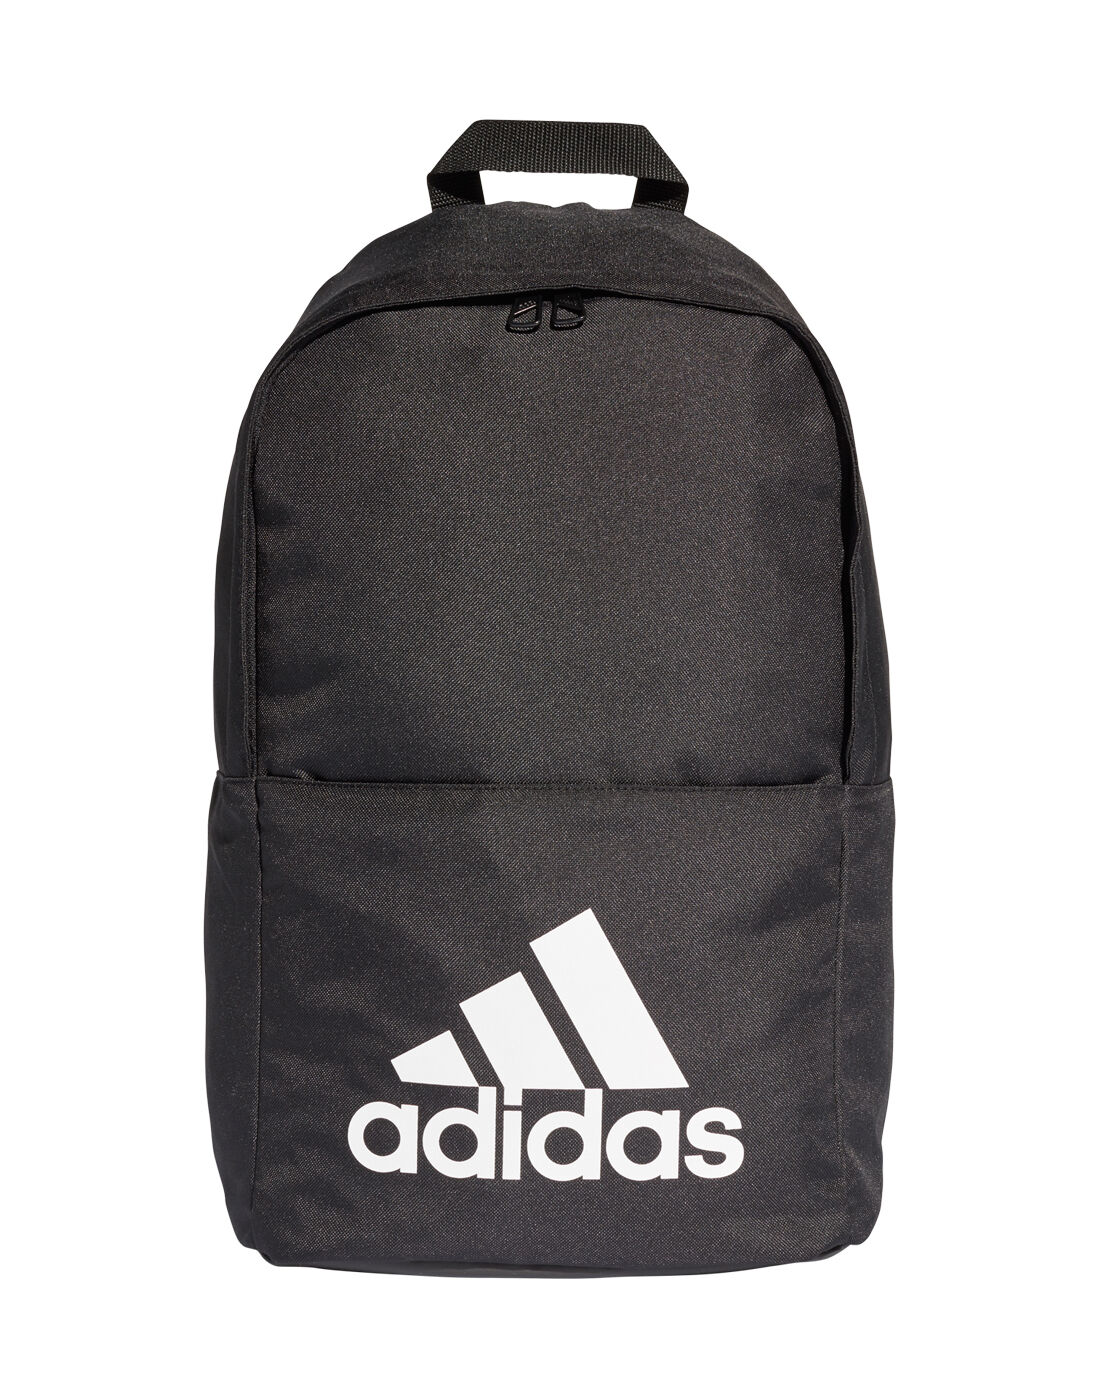 adidas originals sport backpack black white